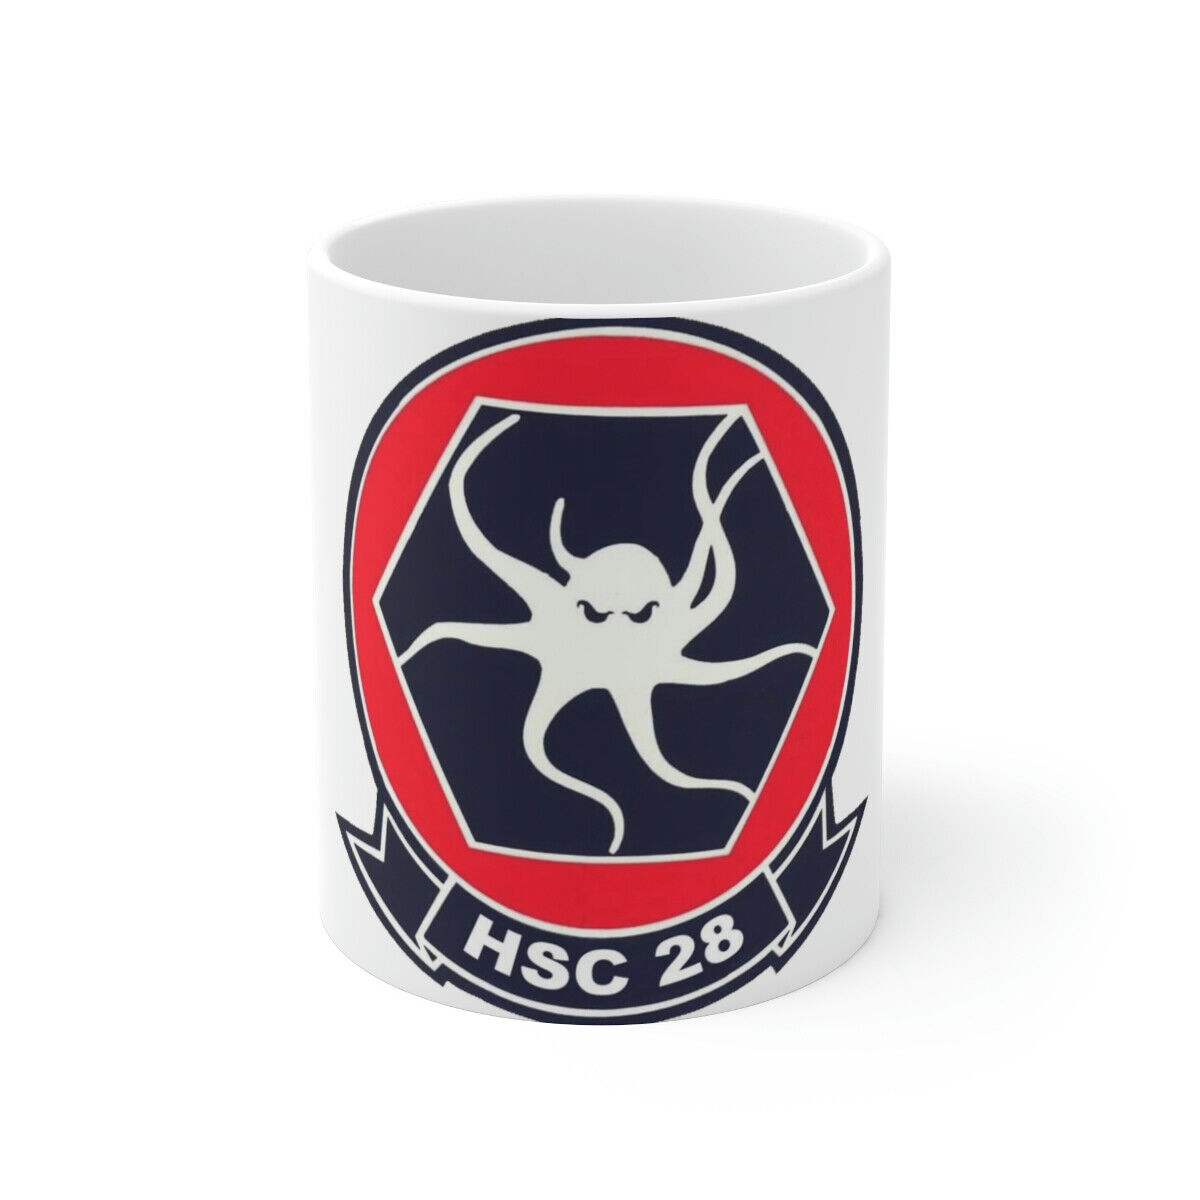 HSC 28 (U.S. Navy) White Coffee Cup 11oz